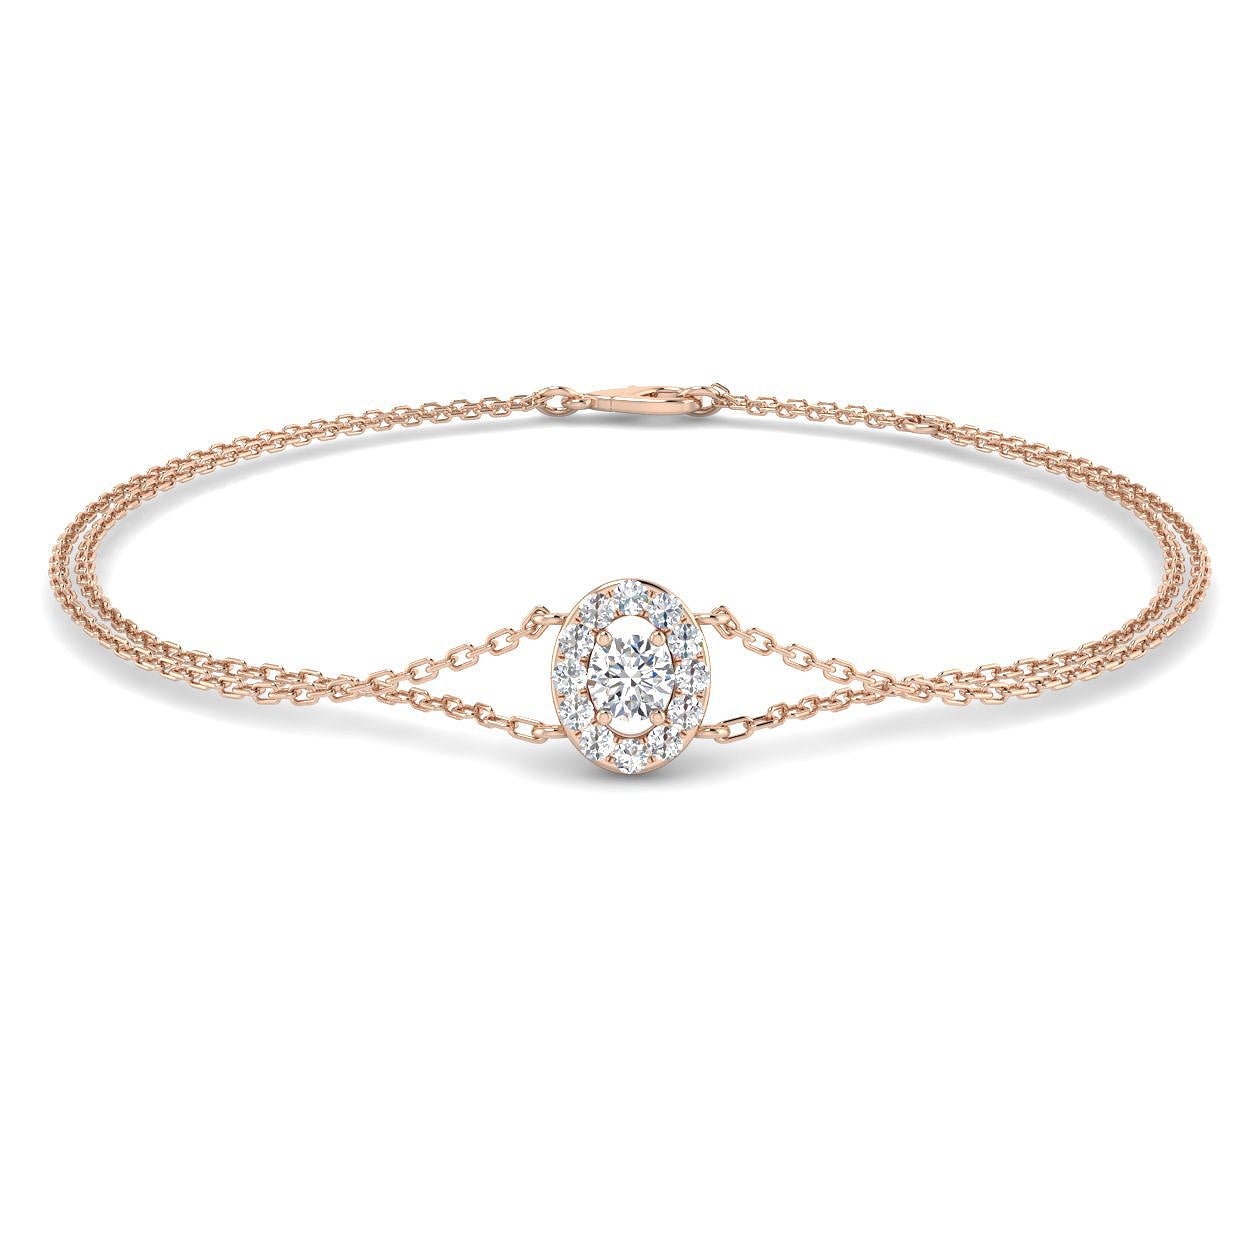 Oval Halo Diamond Bracelet 0.30ct G/SI Quality in 18k Rose Gold - All Diamond